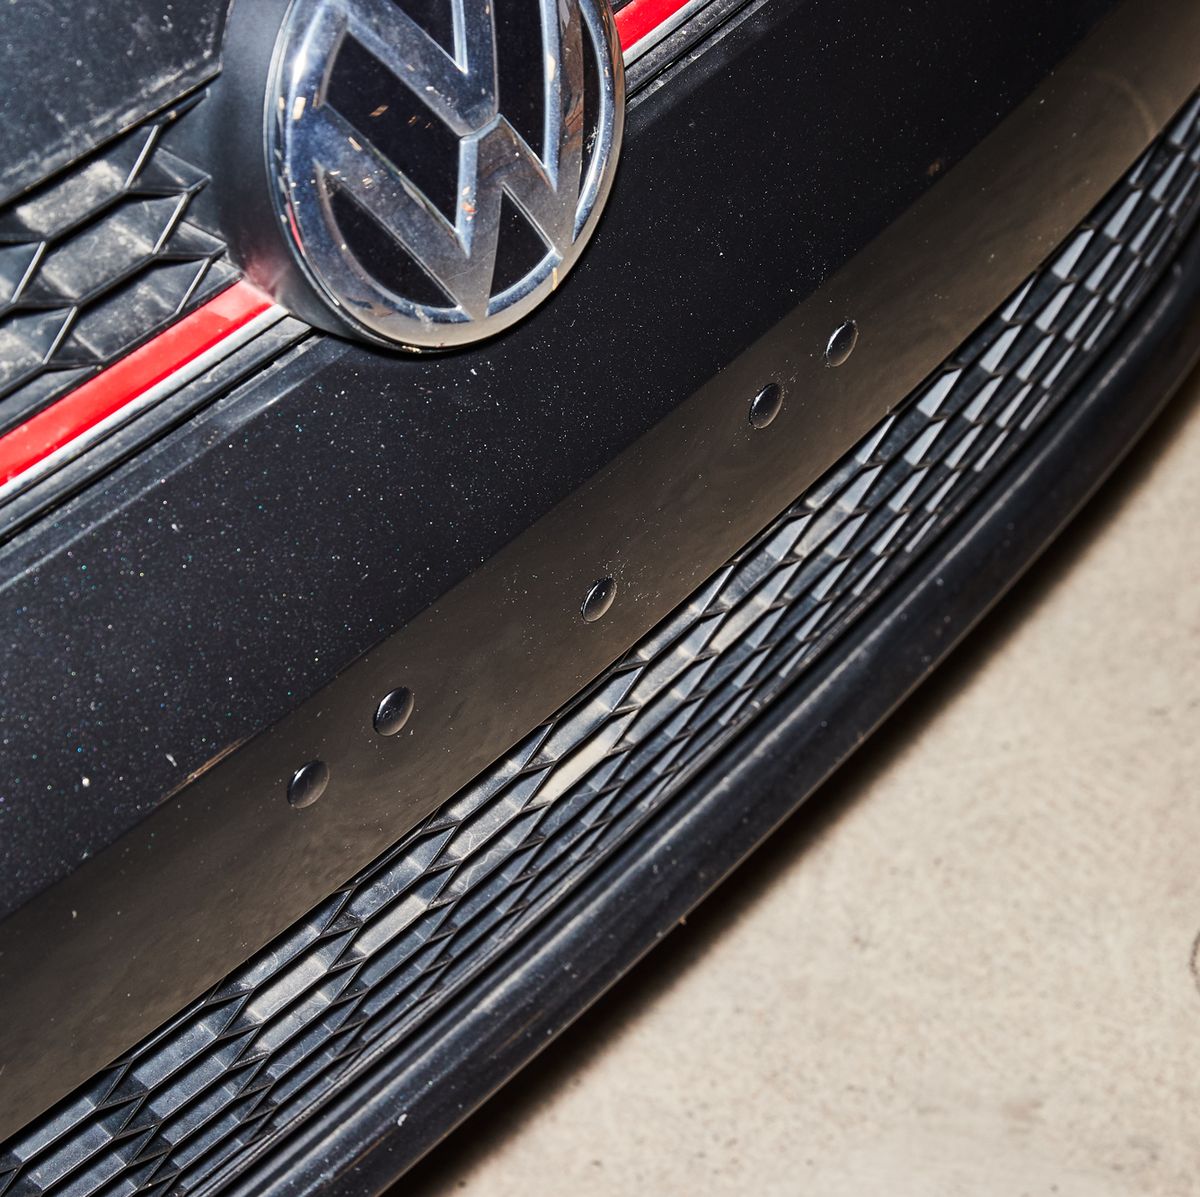 Genuine Carbon Fiber License Plate Frame | Camisasca Automotive Online Store